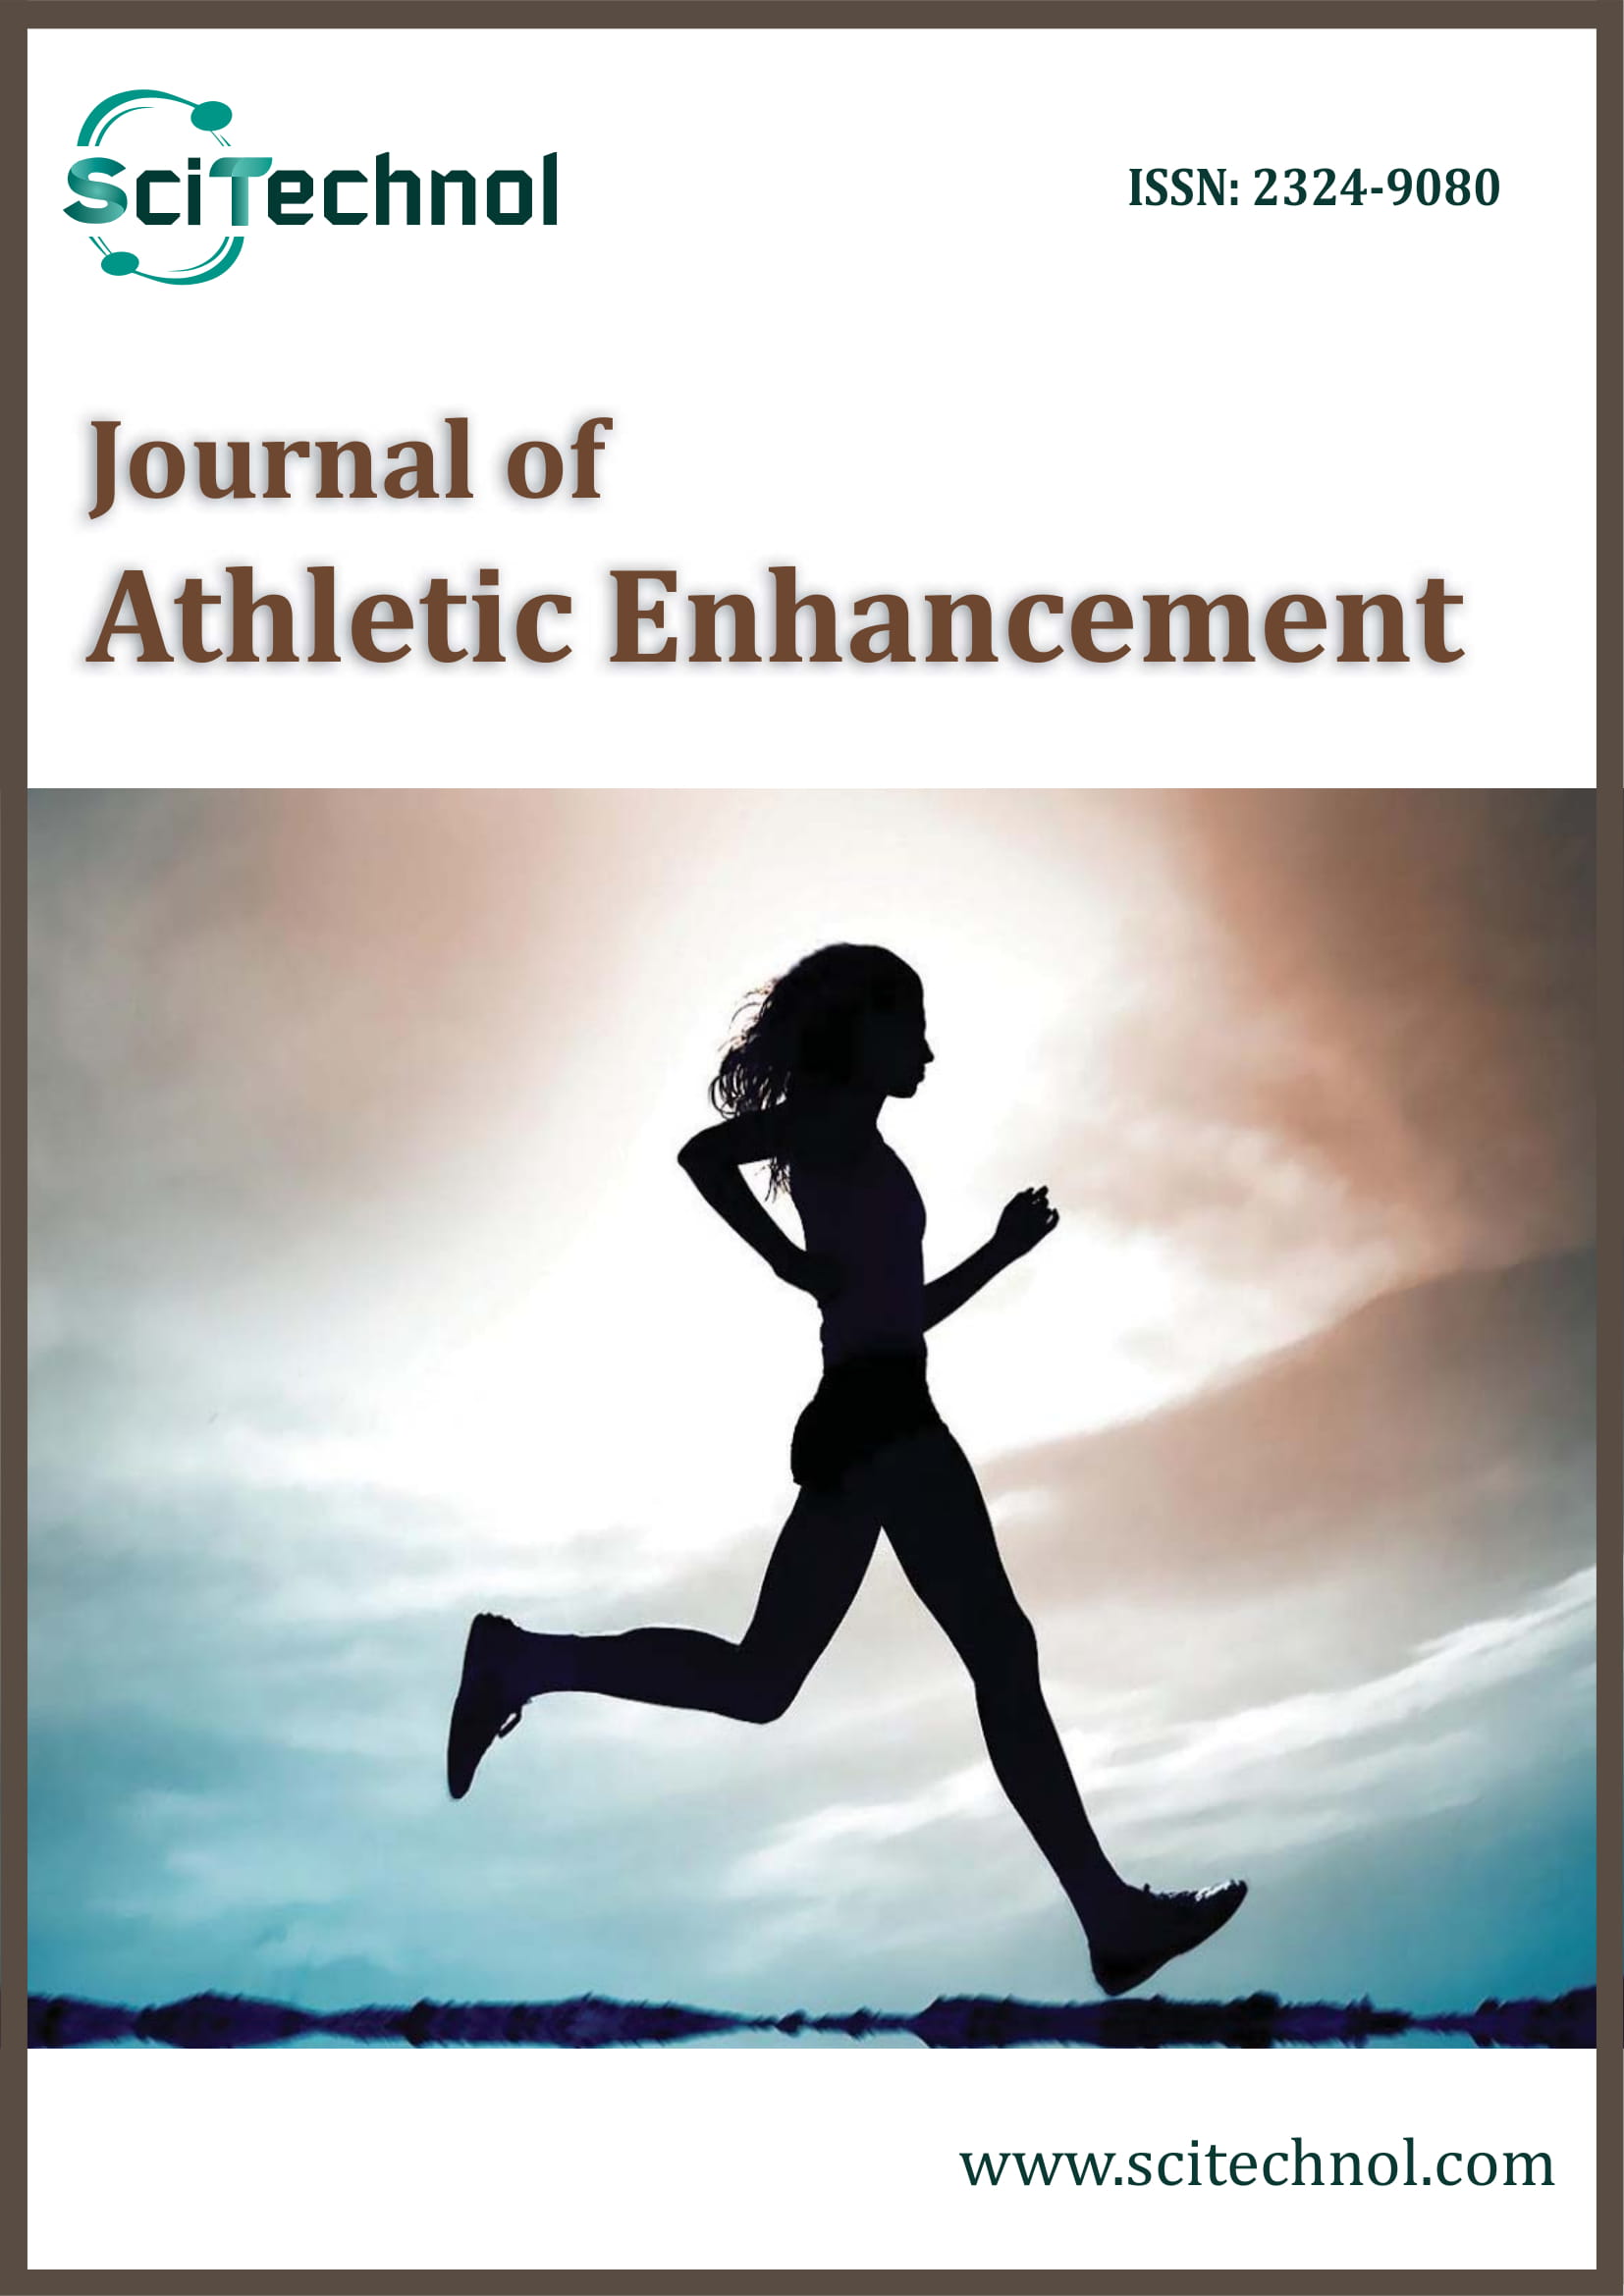 Journal-of-Athletic-Enhancement-flyer.jpg